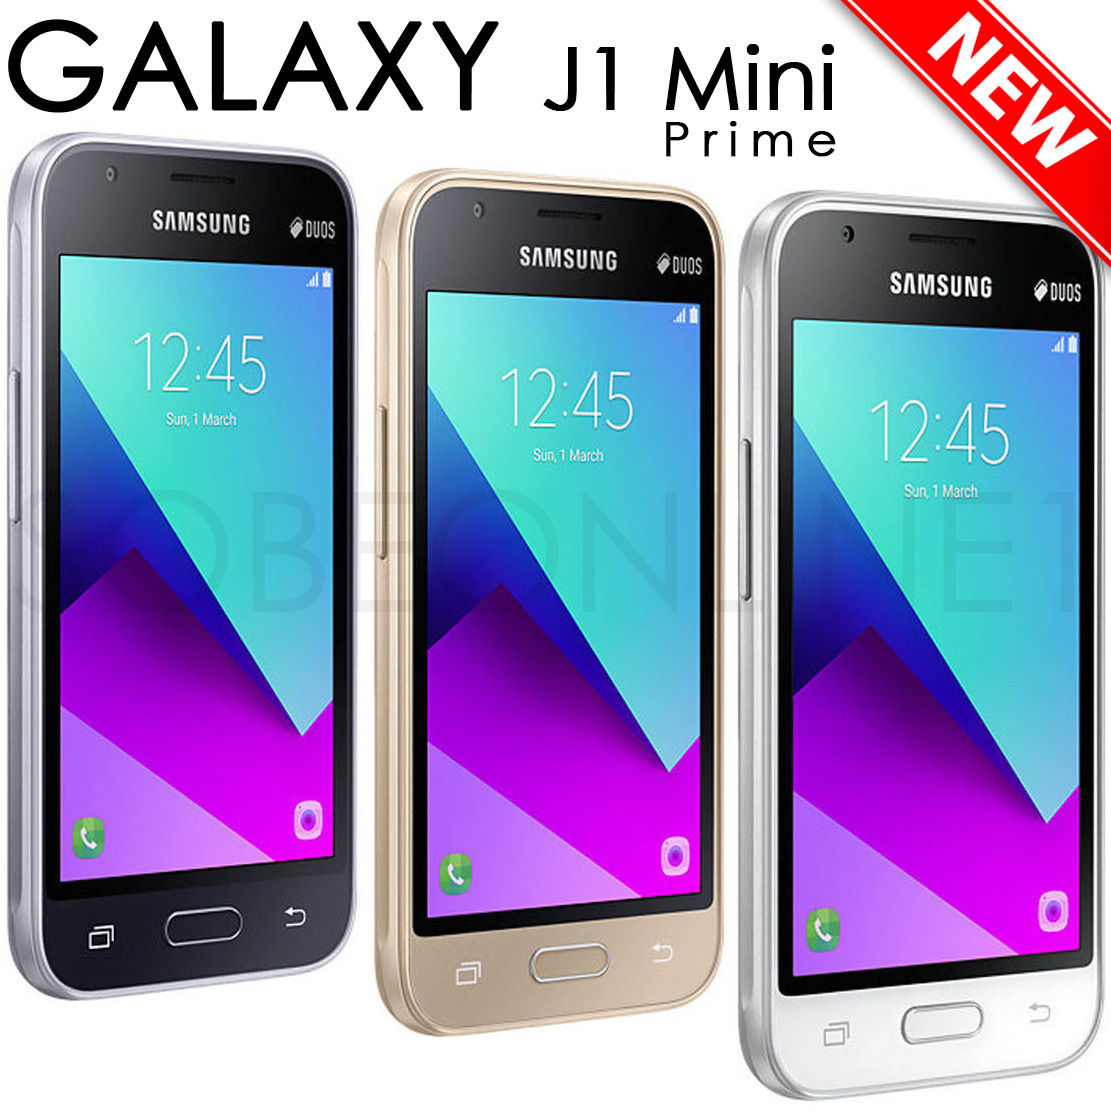 Samsung galaxy sm mini. Samsung Galaxy j1 Mini. Samsung j1 Mini Prime. Samsung Galaxy j1 Mini Prime. Samsung Galaxy j1 Prime.